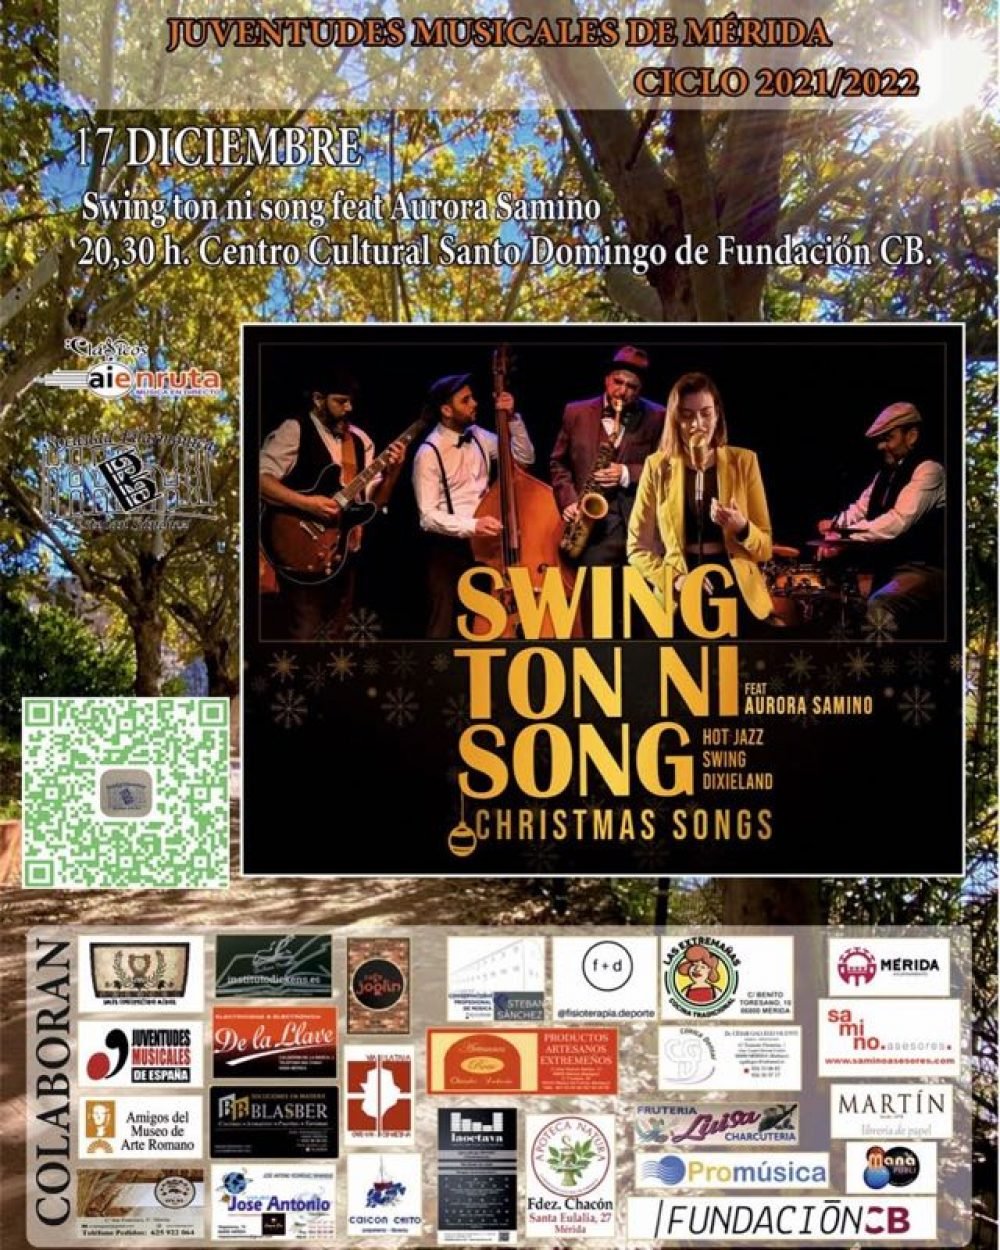 Concierto ‘Christmas Songs’ de Swing Ton ni Song & Aurora Samino